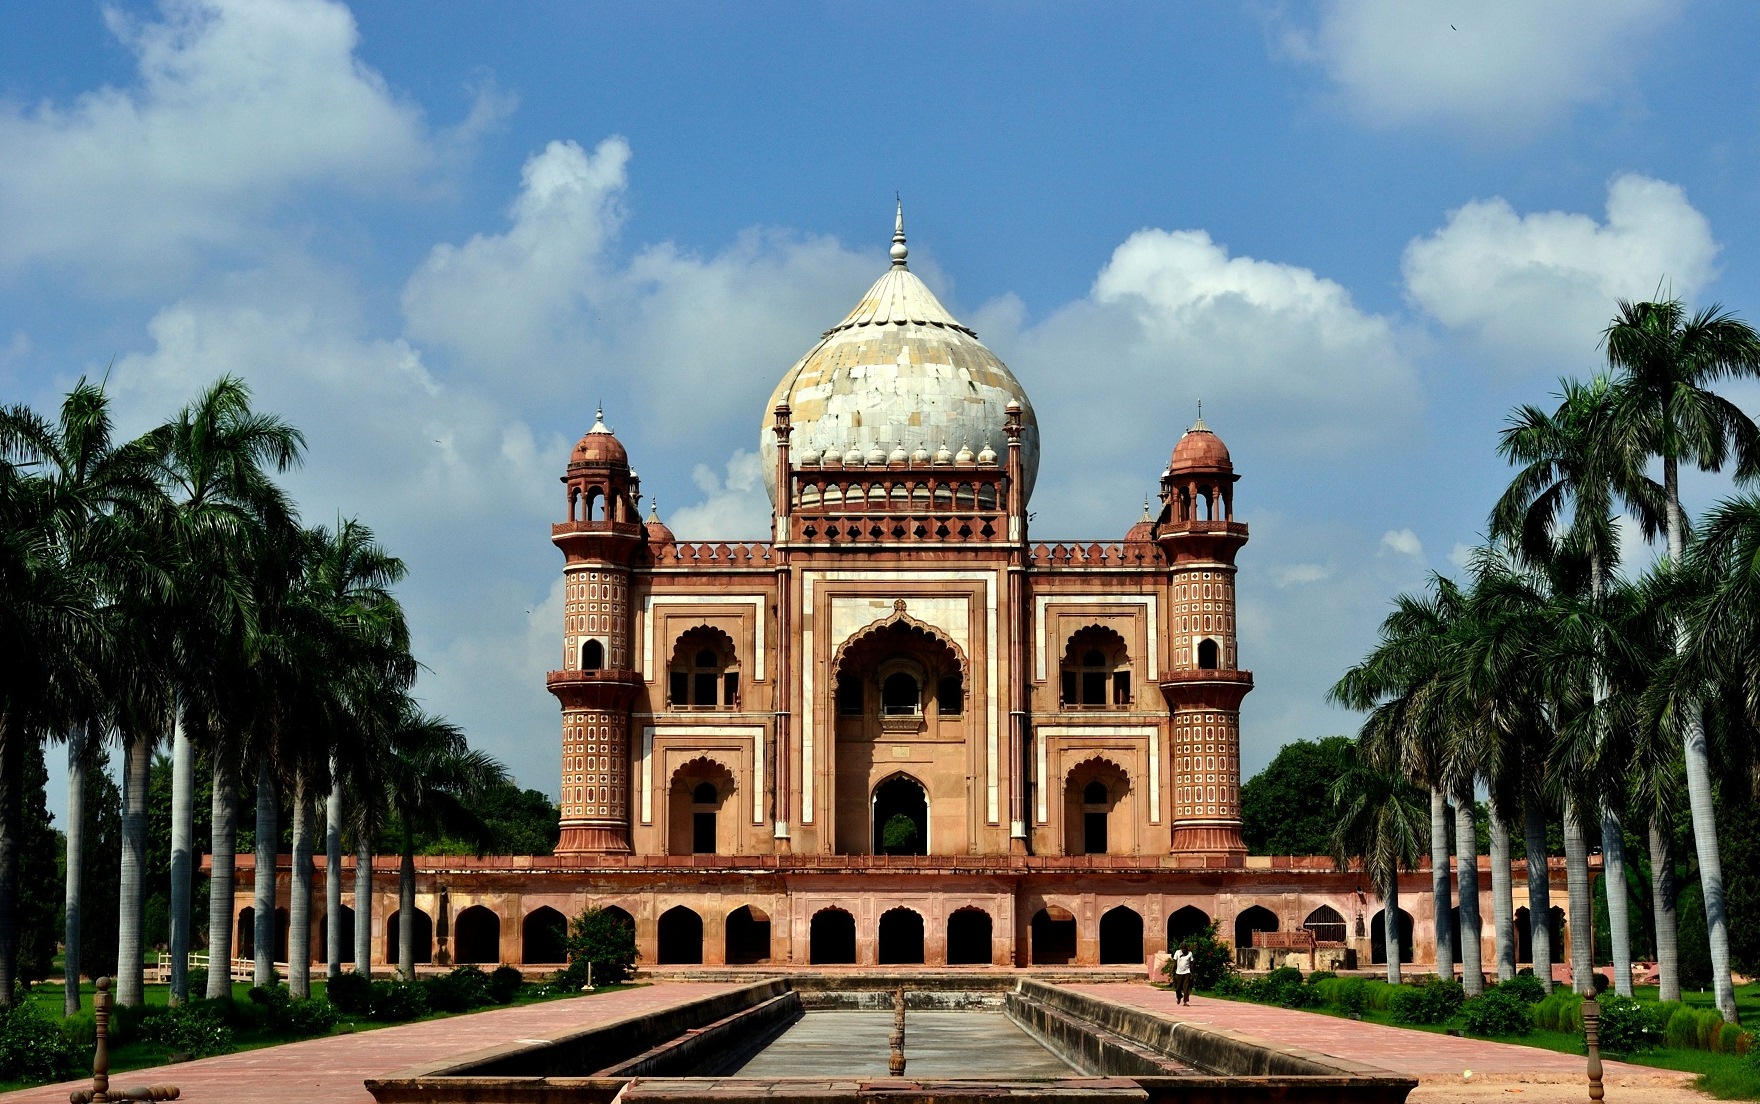 File:Safdar Jang's Tomb, Delhi .jpg - Wikimedia Commons